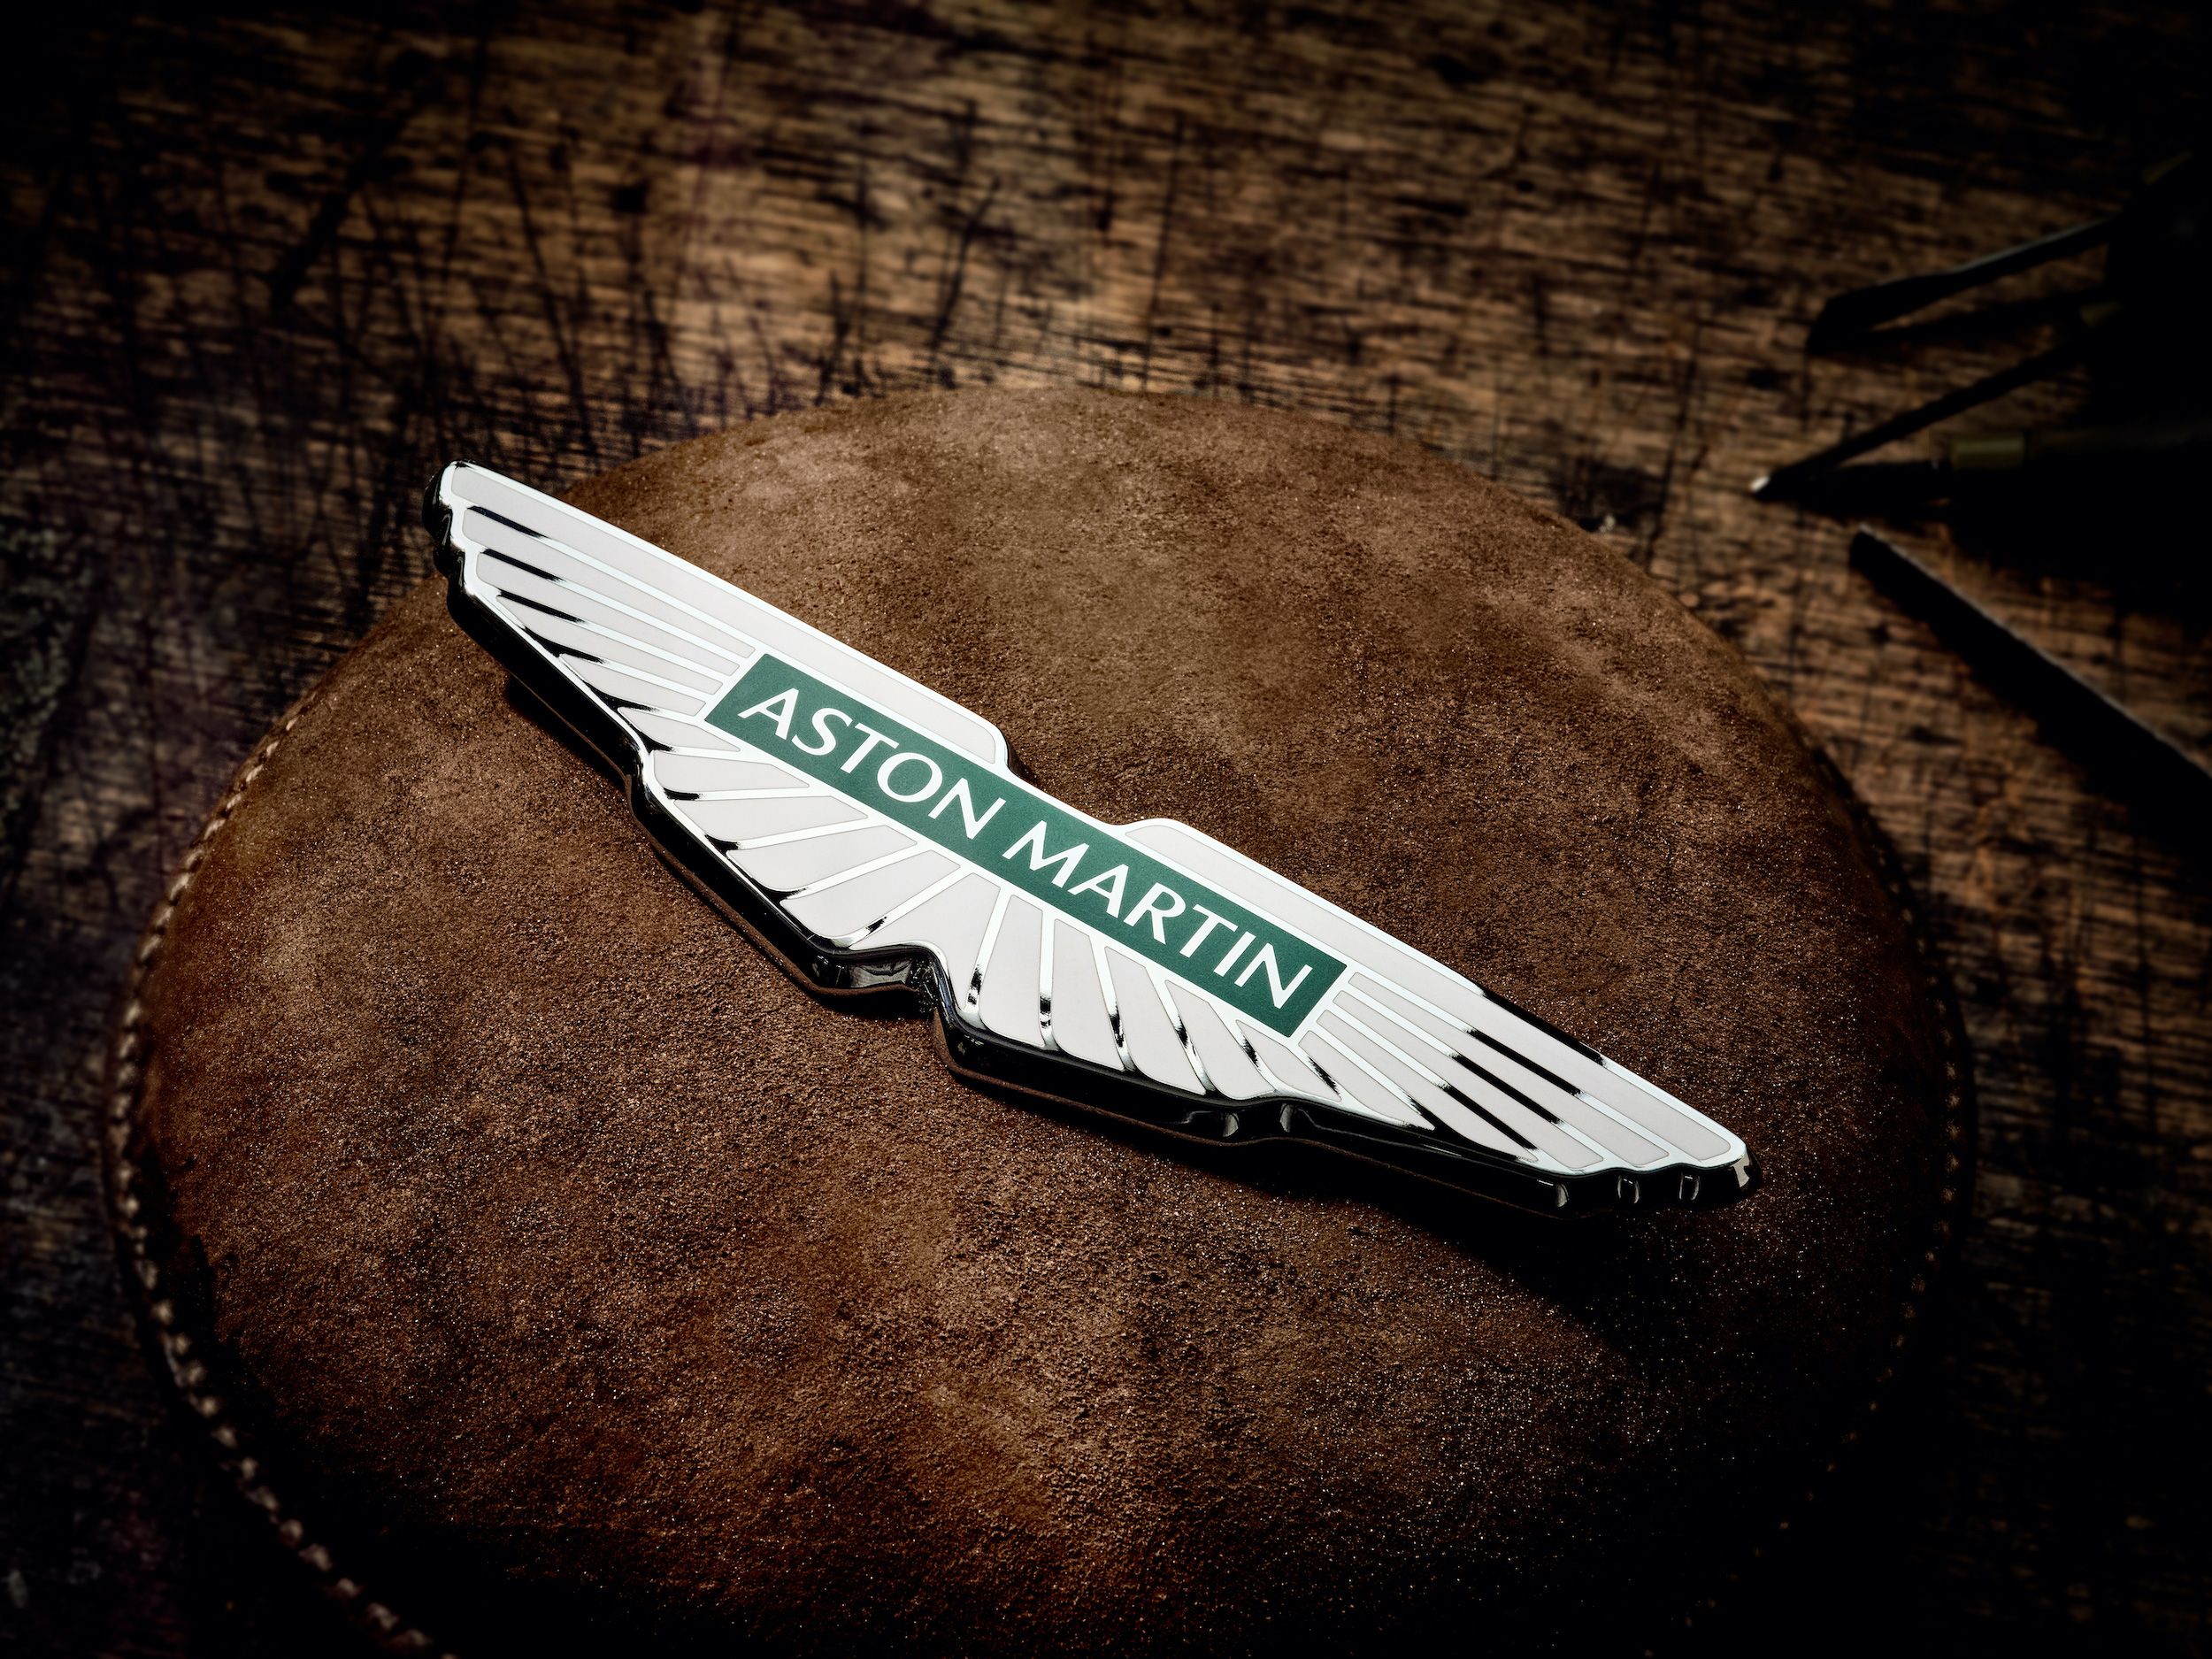 aston-martin-wings-badge-production-07-1658332733.jpg